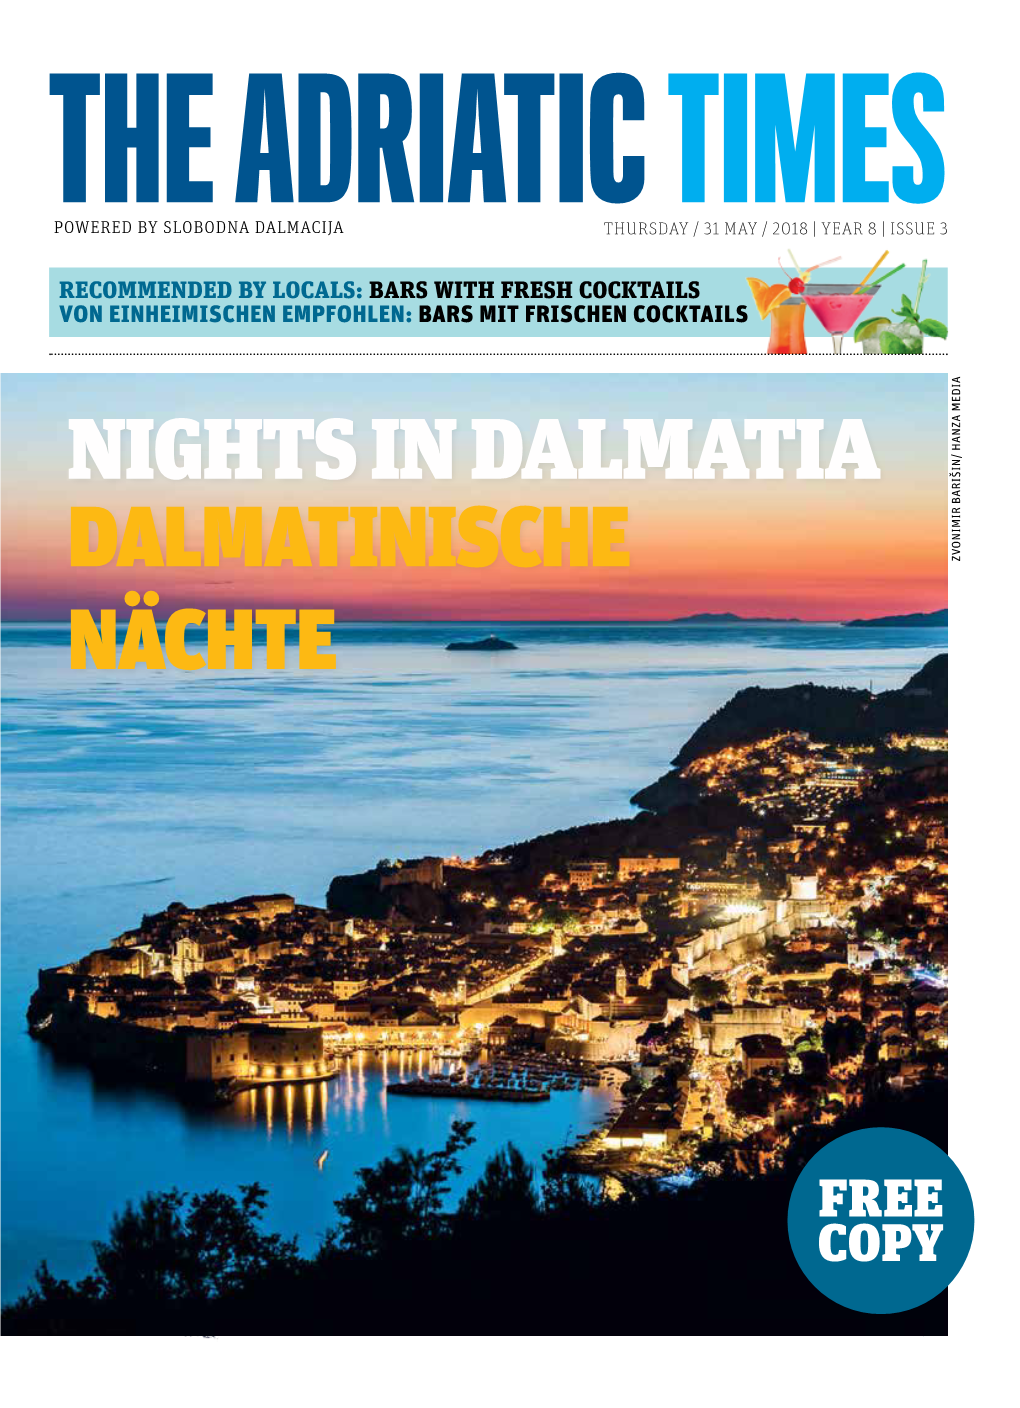 Dalmatinische Nächte Nights in Dalmatia